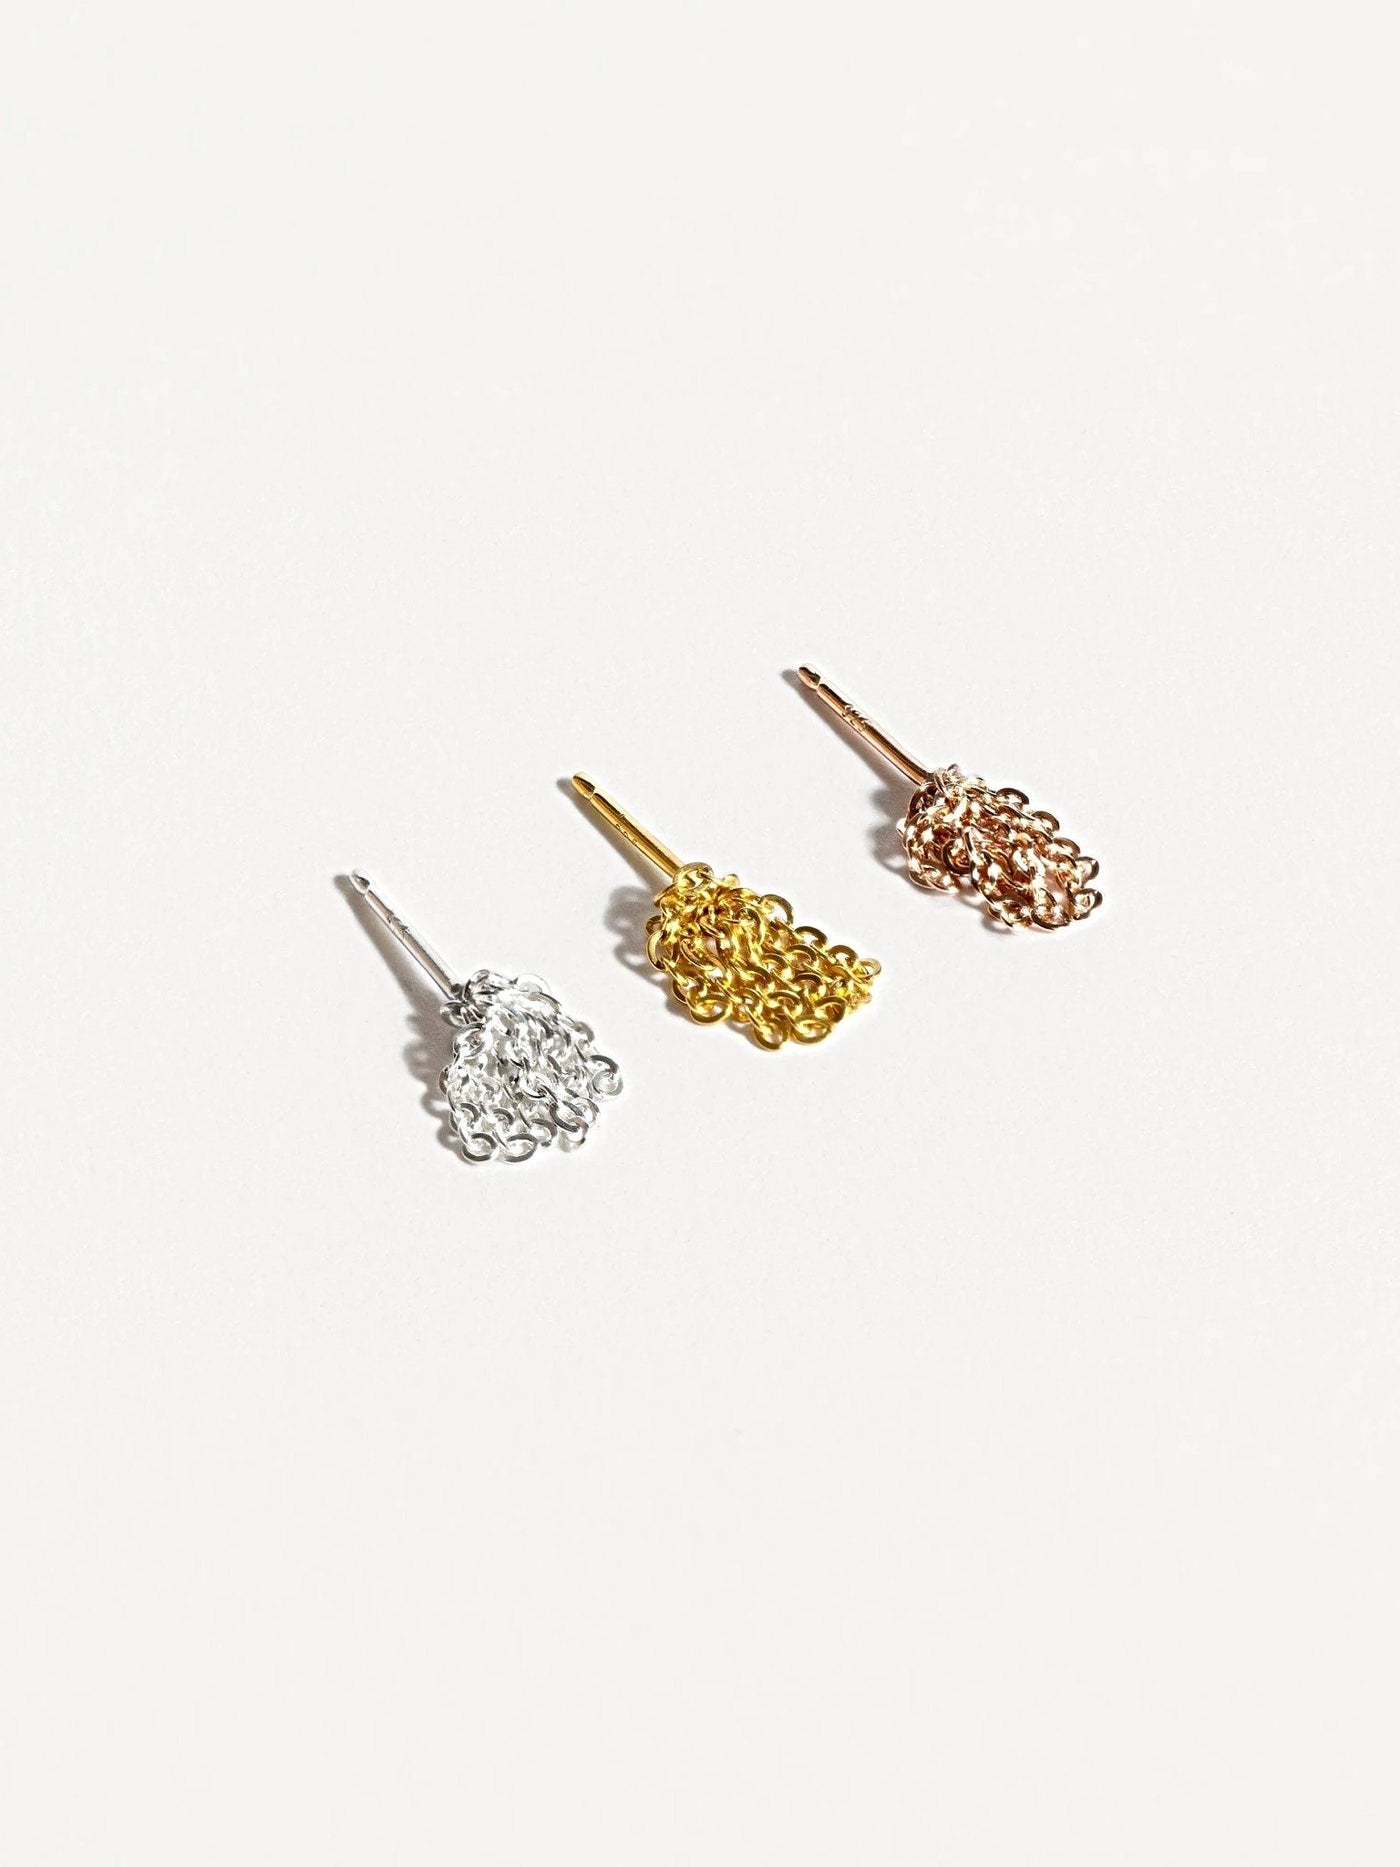 Vidia Tassel Earrings - 925 Sterling SilverankorBackUpItemsLunai Jewelry